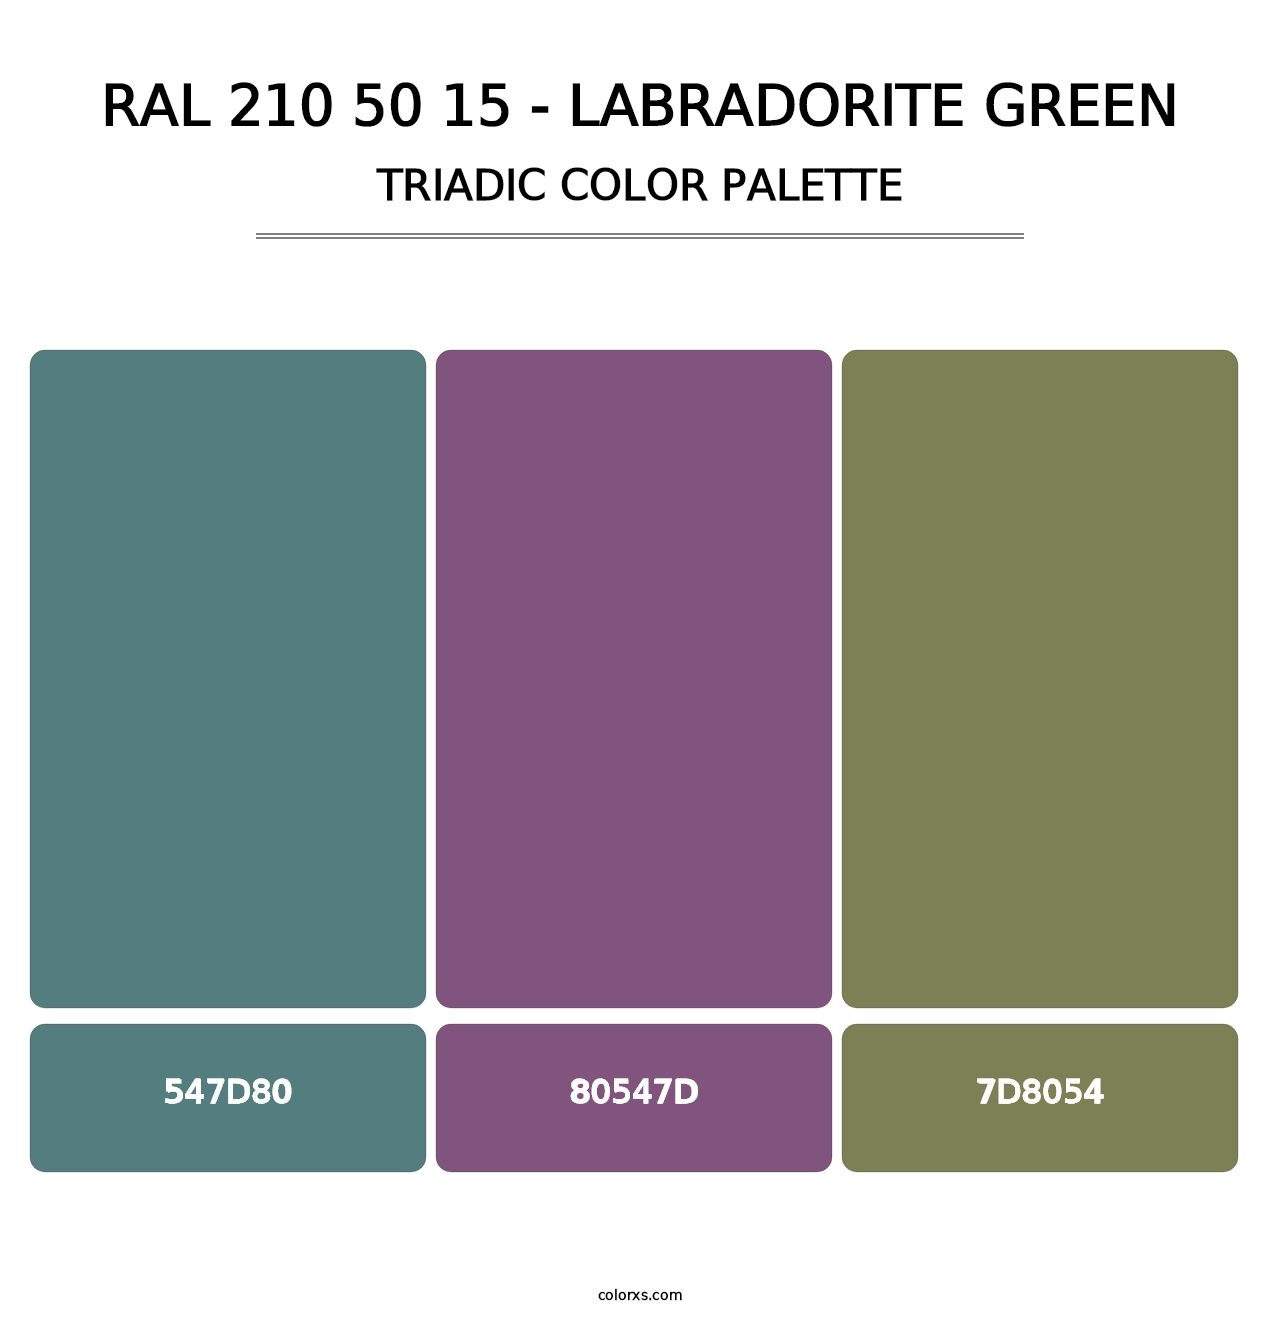 RAL 210 50 15 - Labradorite Green - Triadic Color Palette